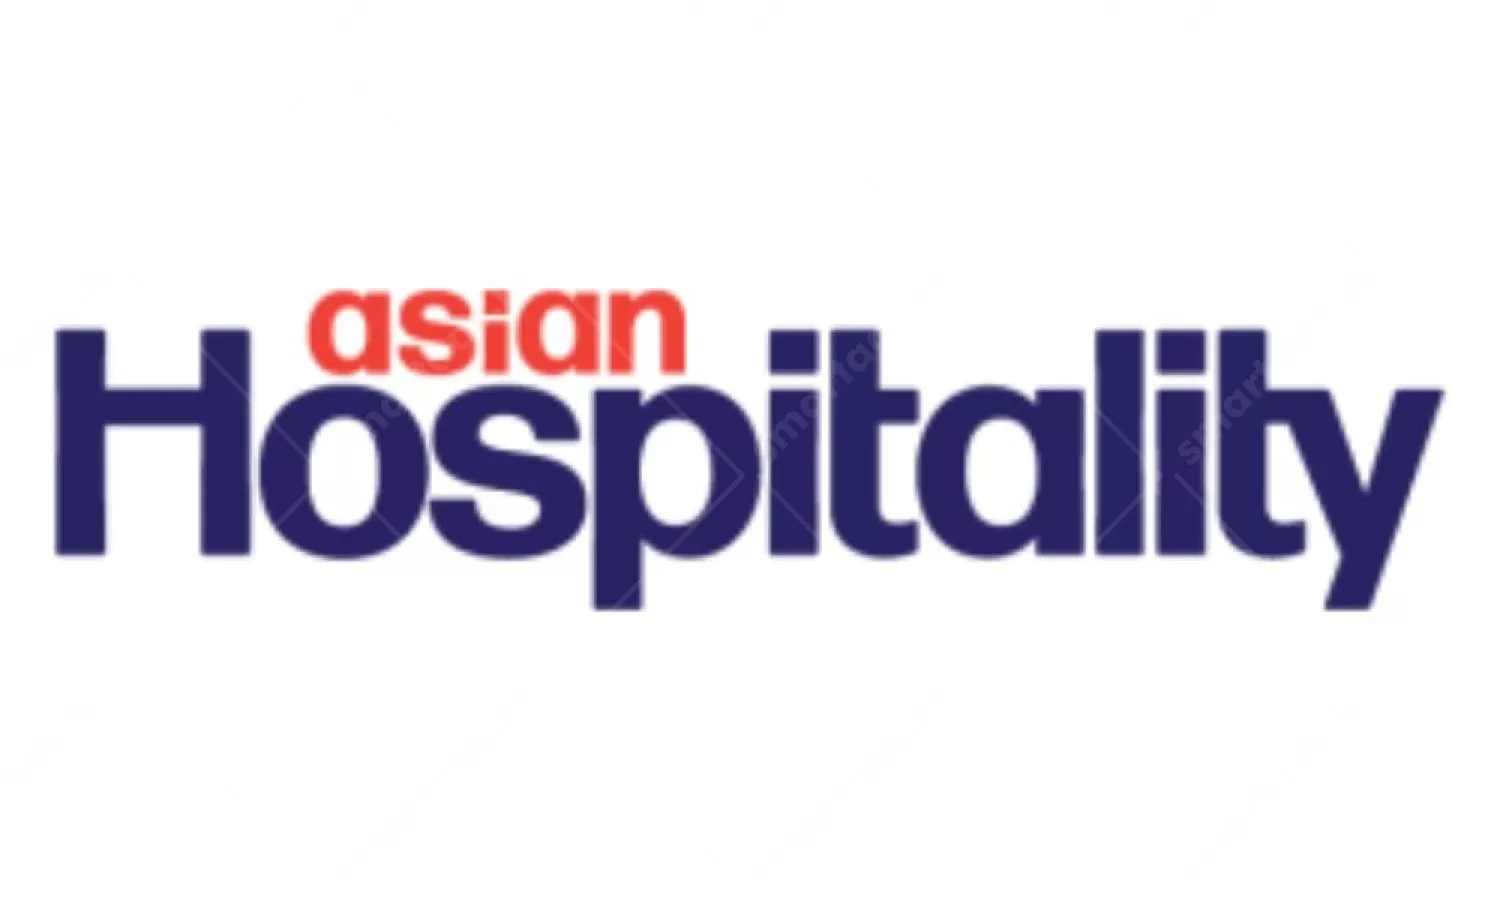 Digital Media Asian Hospitality Advertising in India